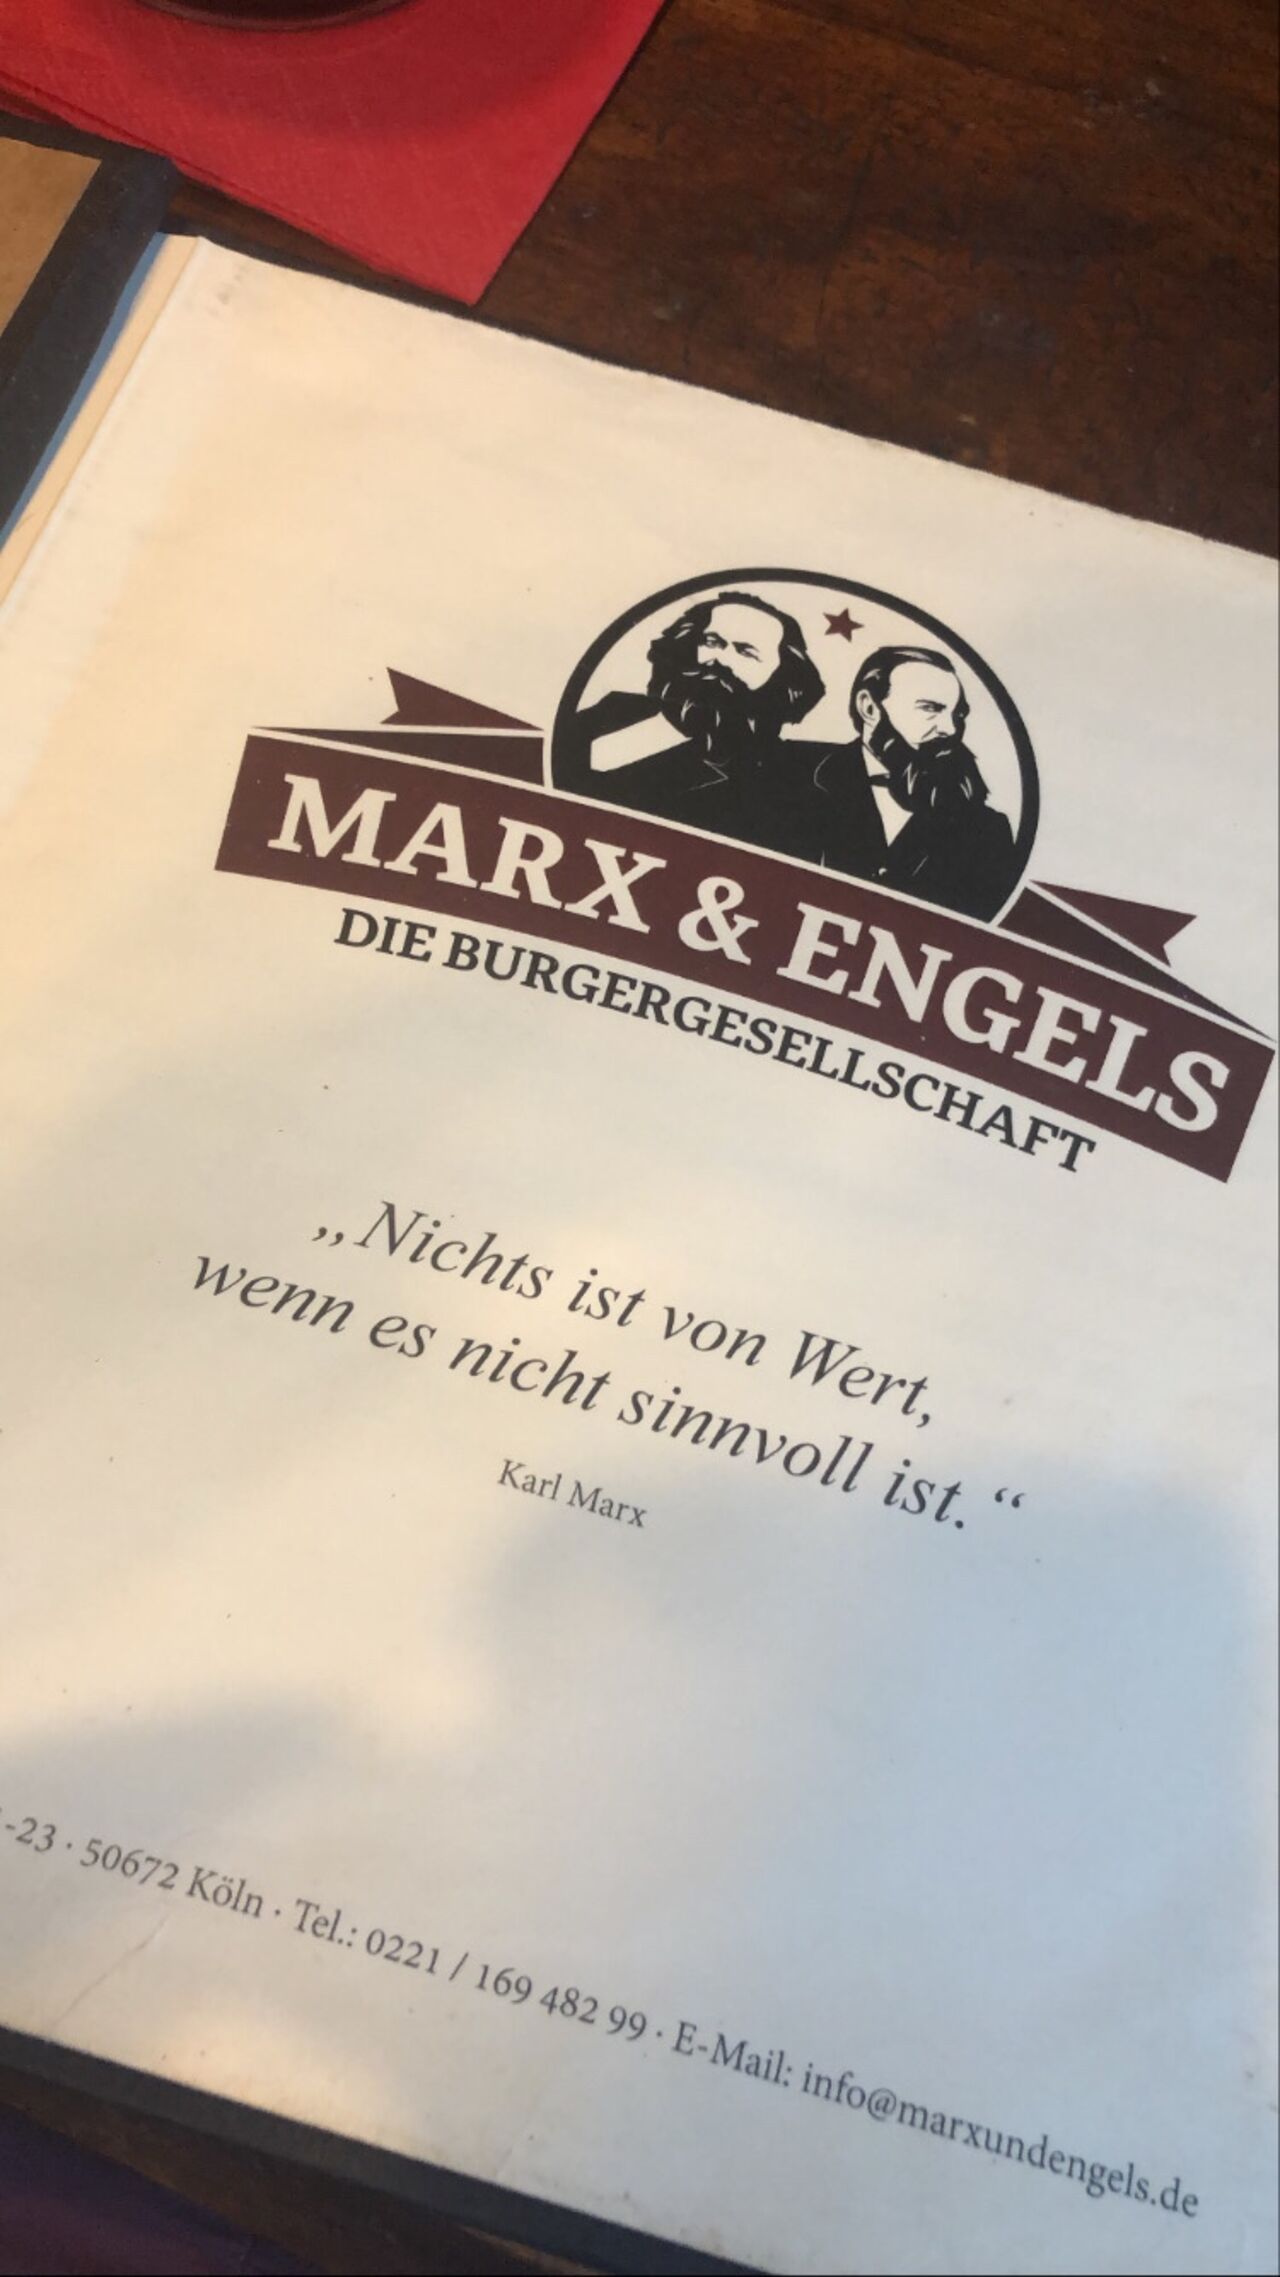 A photo of Marx & Engels